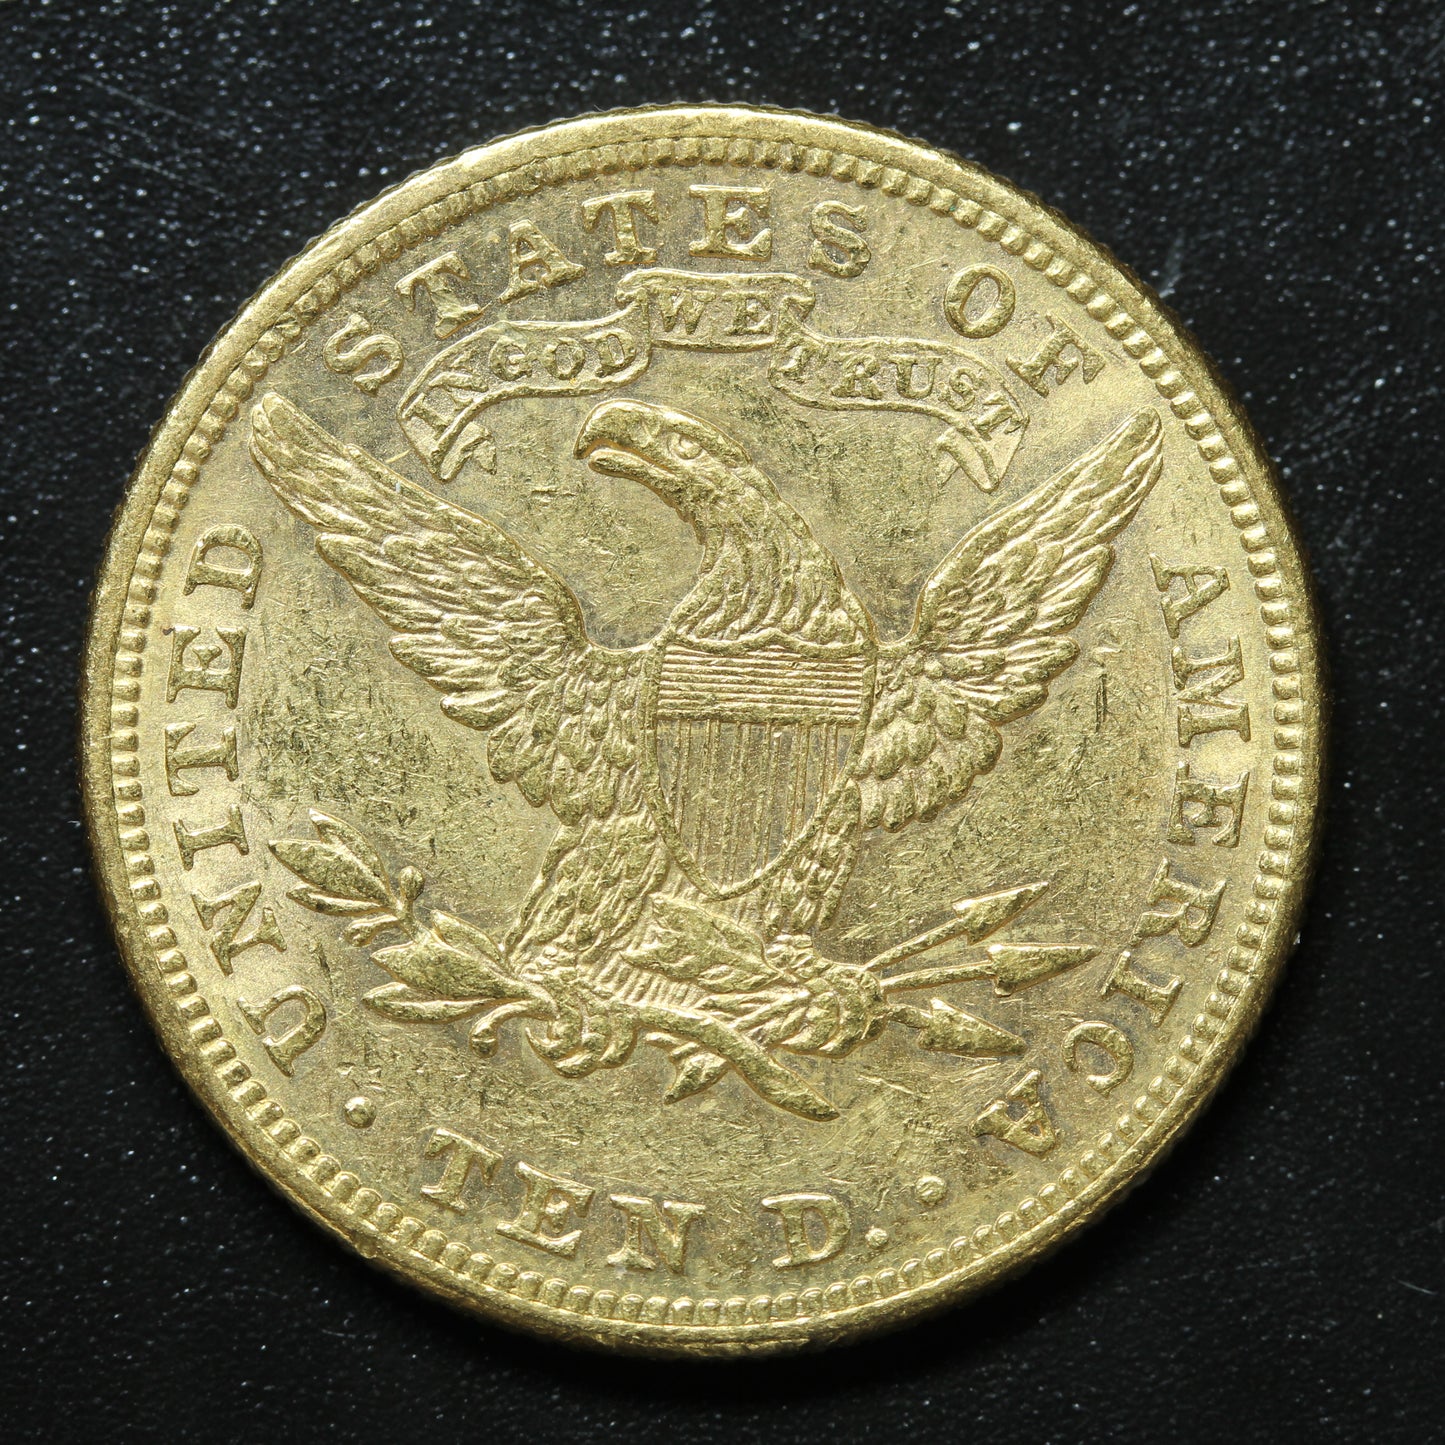 1881 (Philadelphia) $10 Liberty Head US Gold Eagle Coin